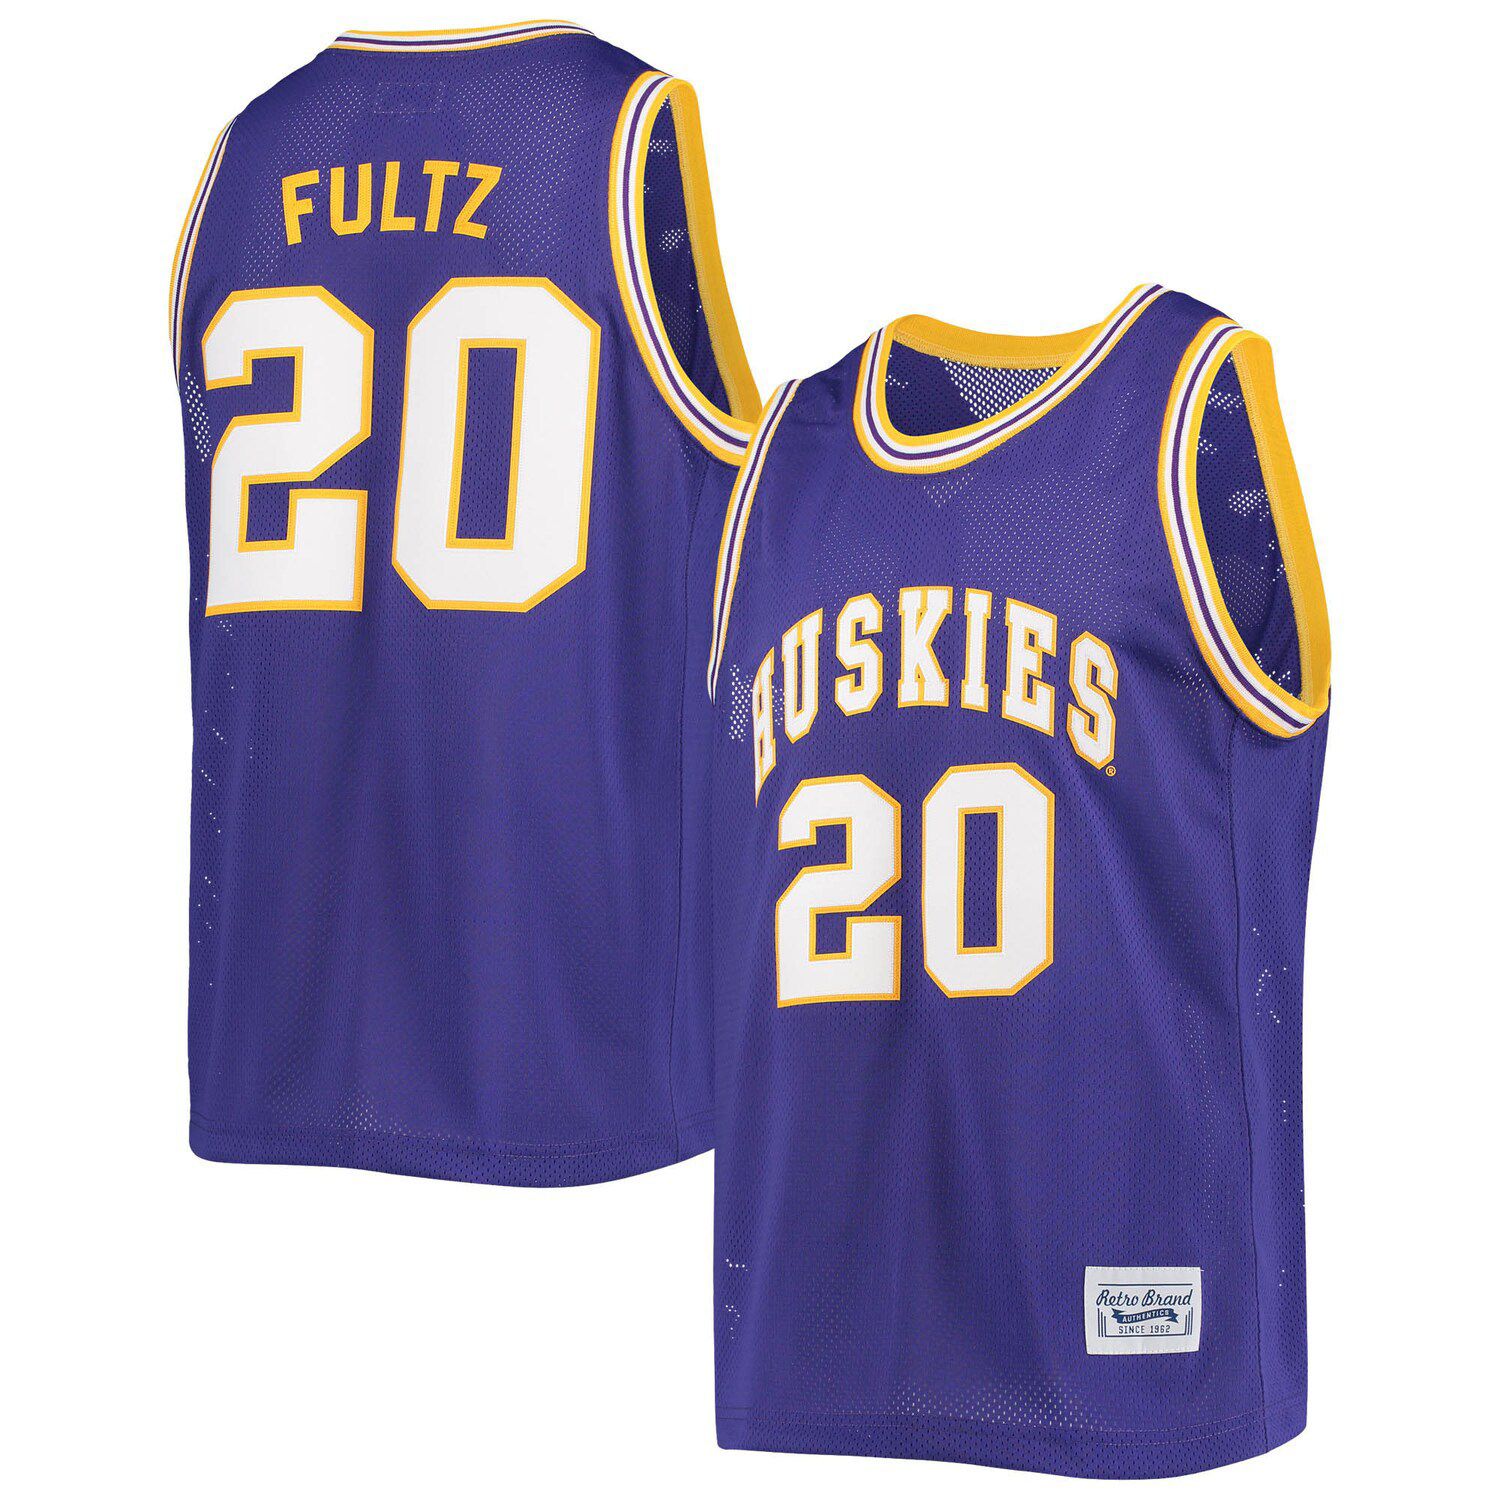 Men's Nike #21 Purple Kansas State Wildcats Replica Basketball